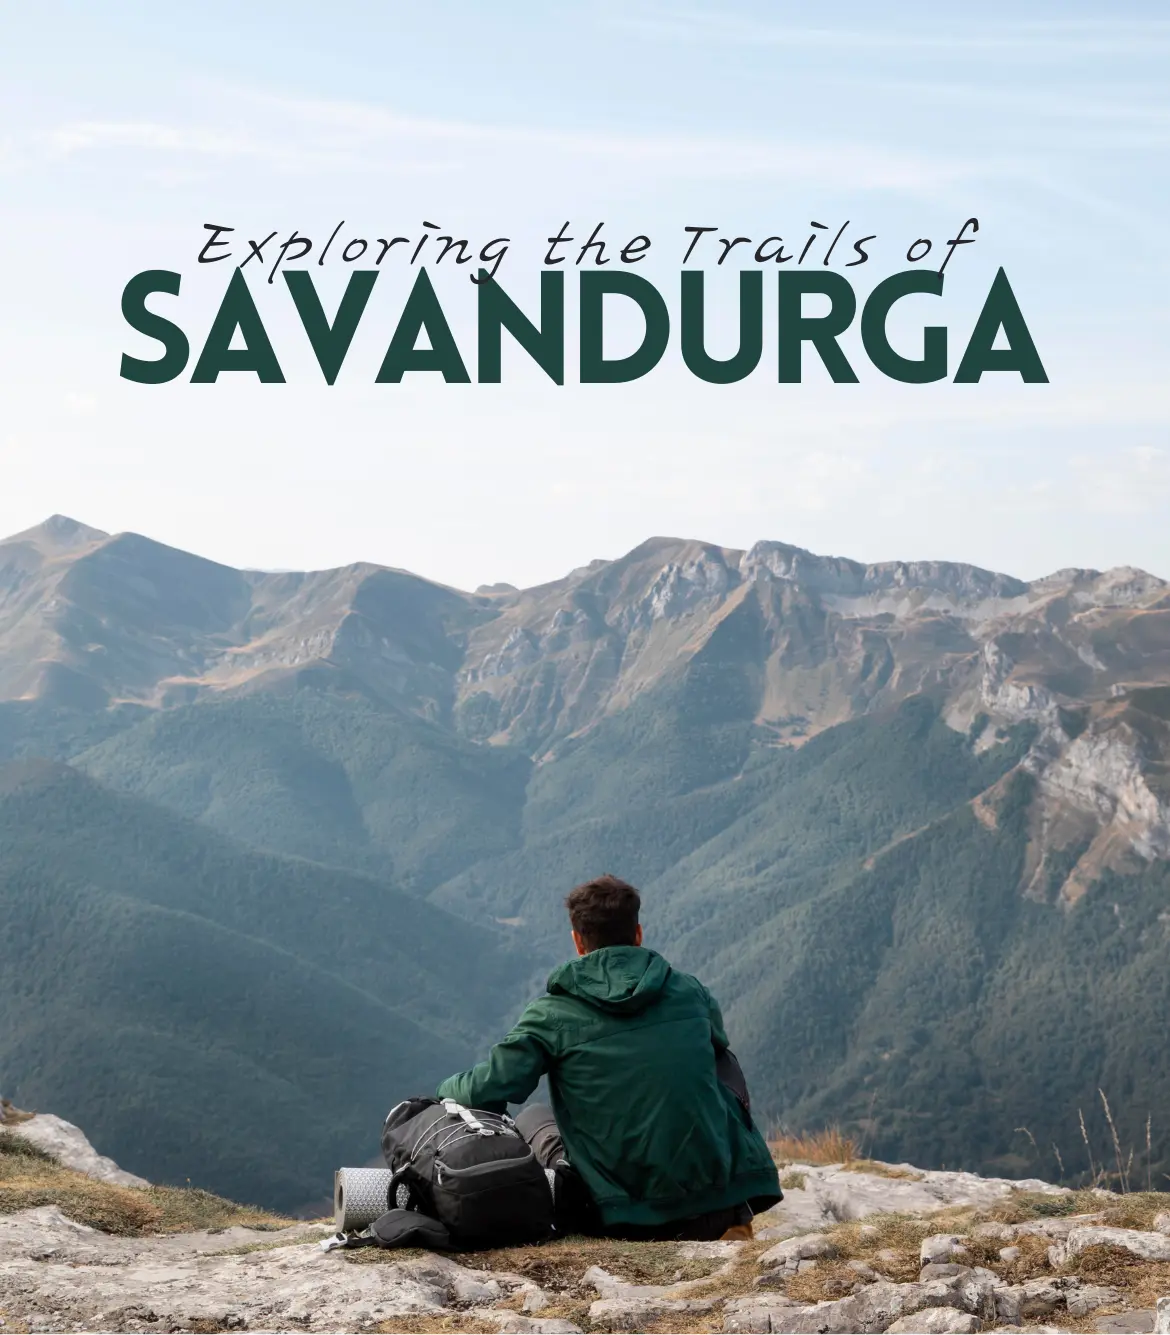 Savandurga Trek from Bangalore